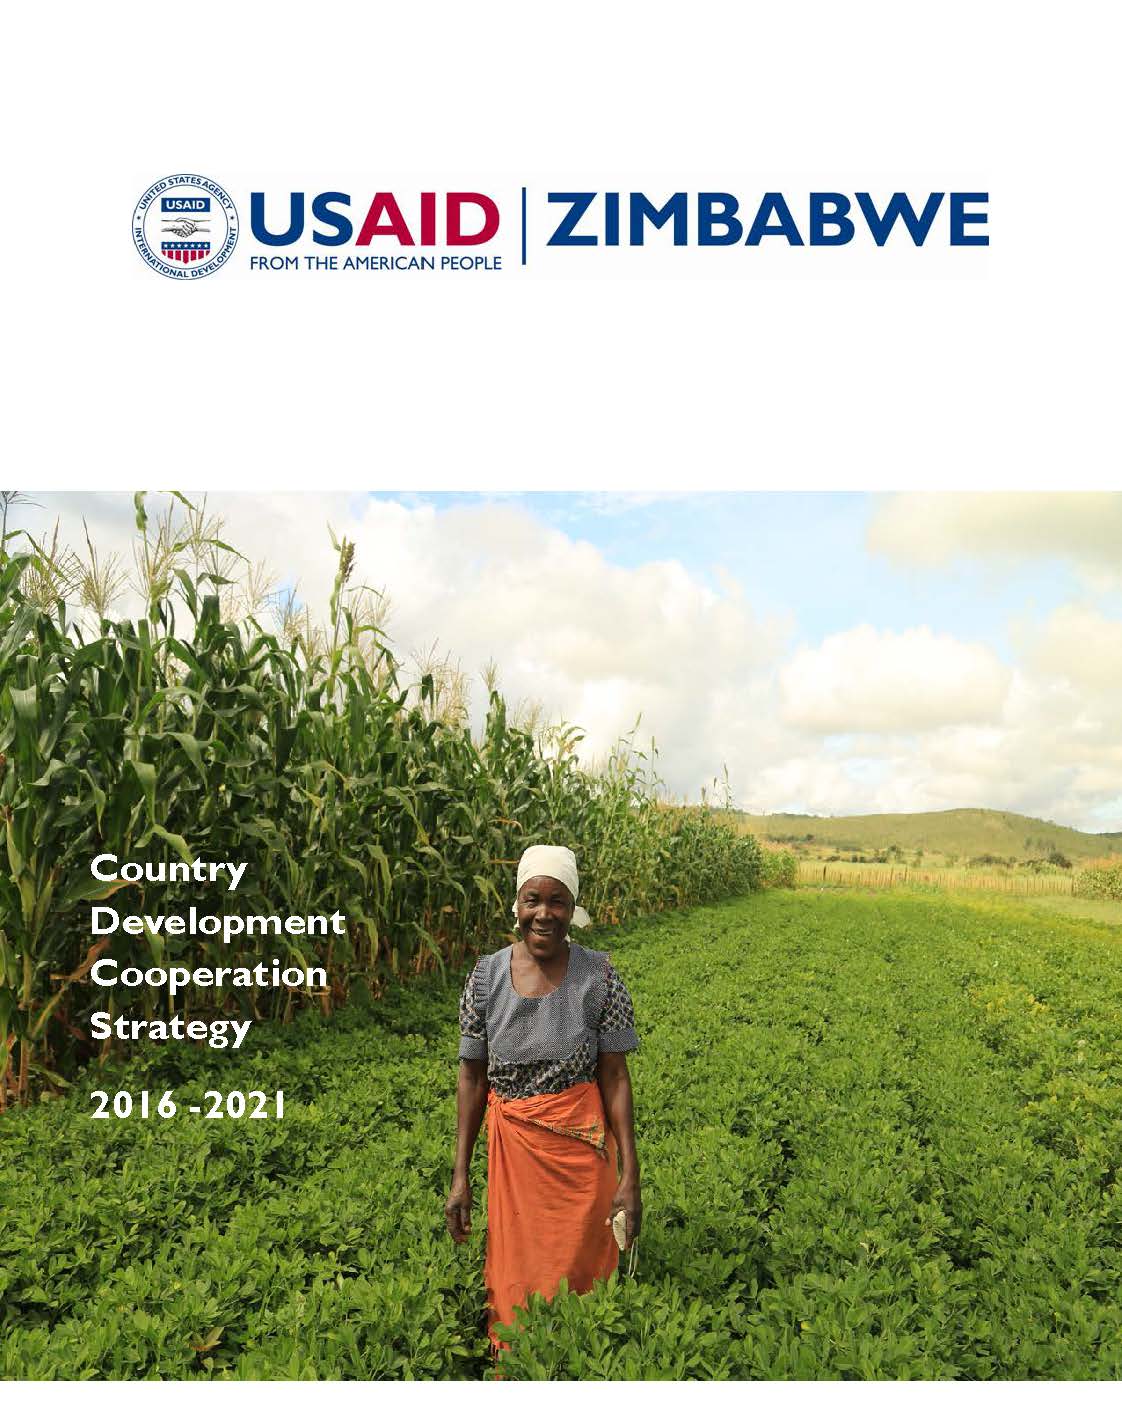 USAID/Zimbabwe Country Development Cooperation Strategy 2016 -2021